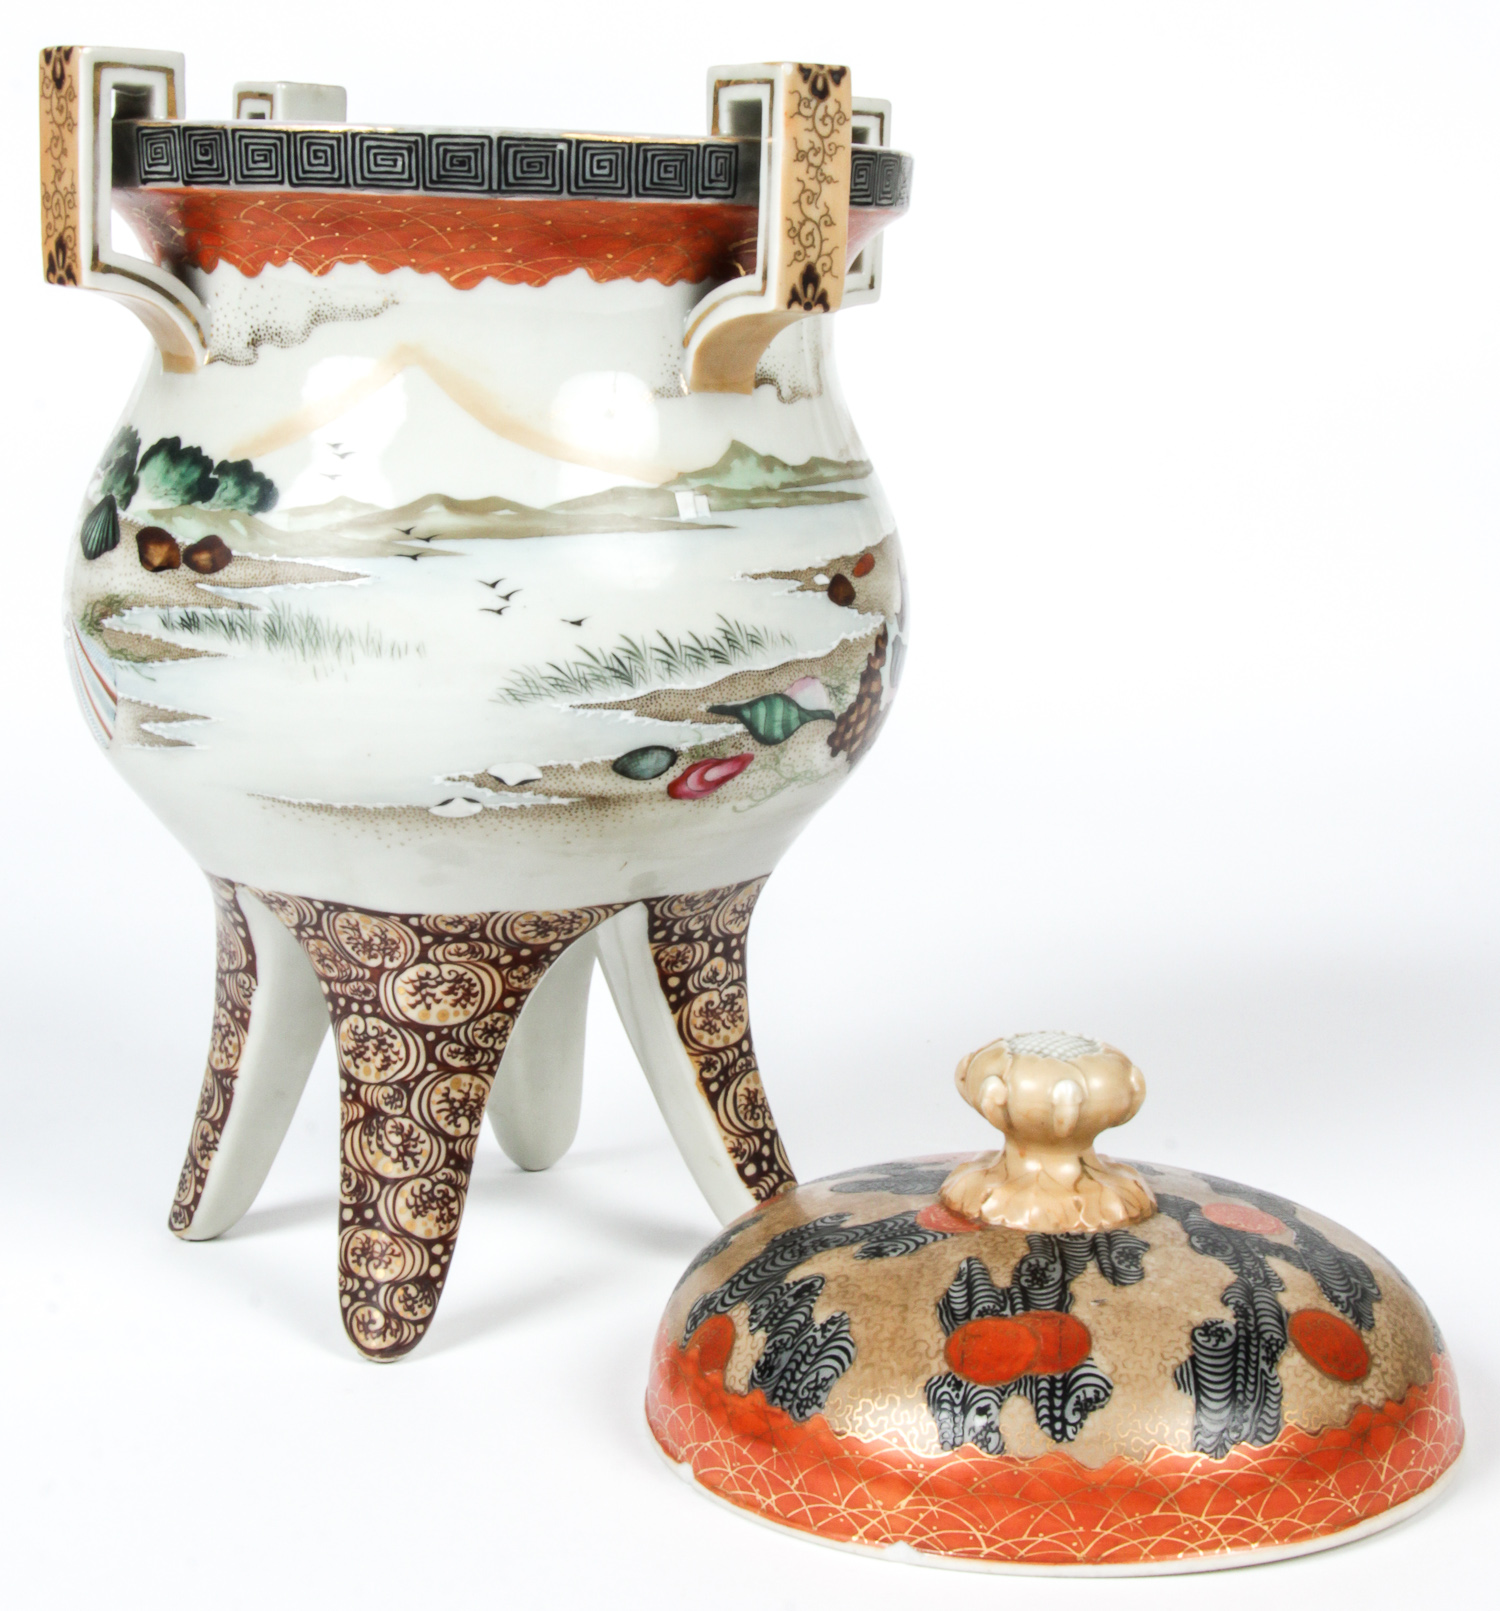 2 Antique Japanese Satsuma and Seto Items: A fine 19th century satsuma earthenware plate depicting - Image 5 of 6